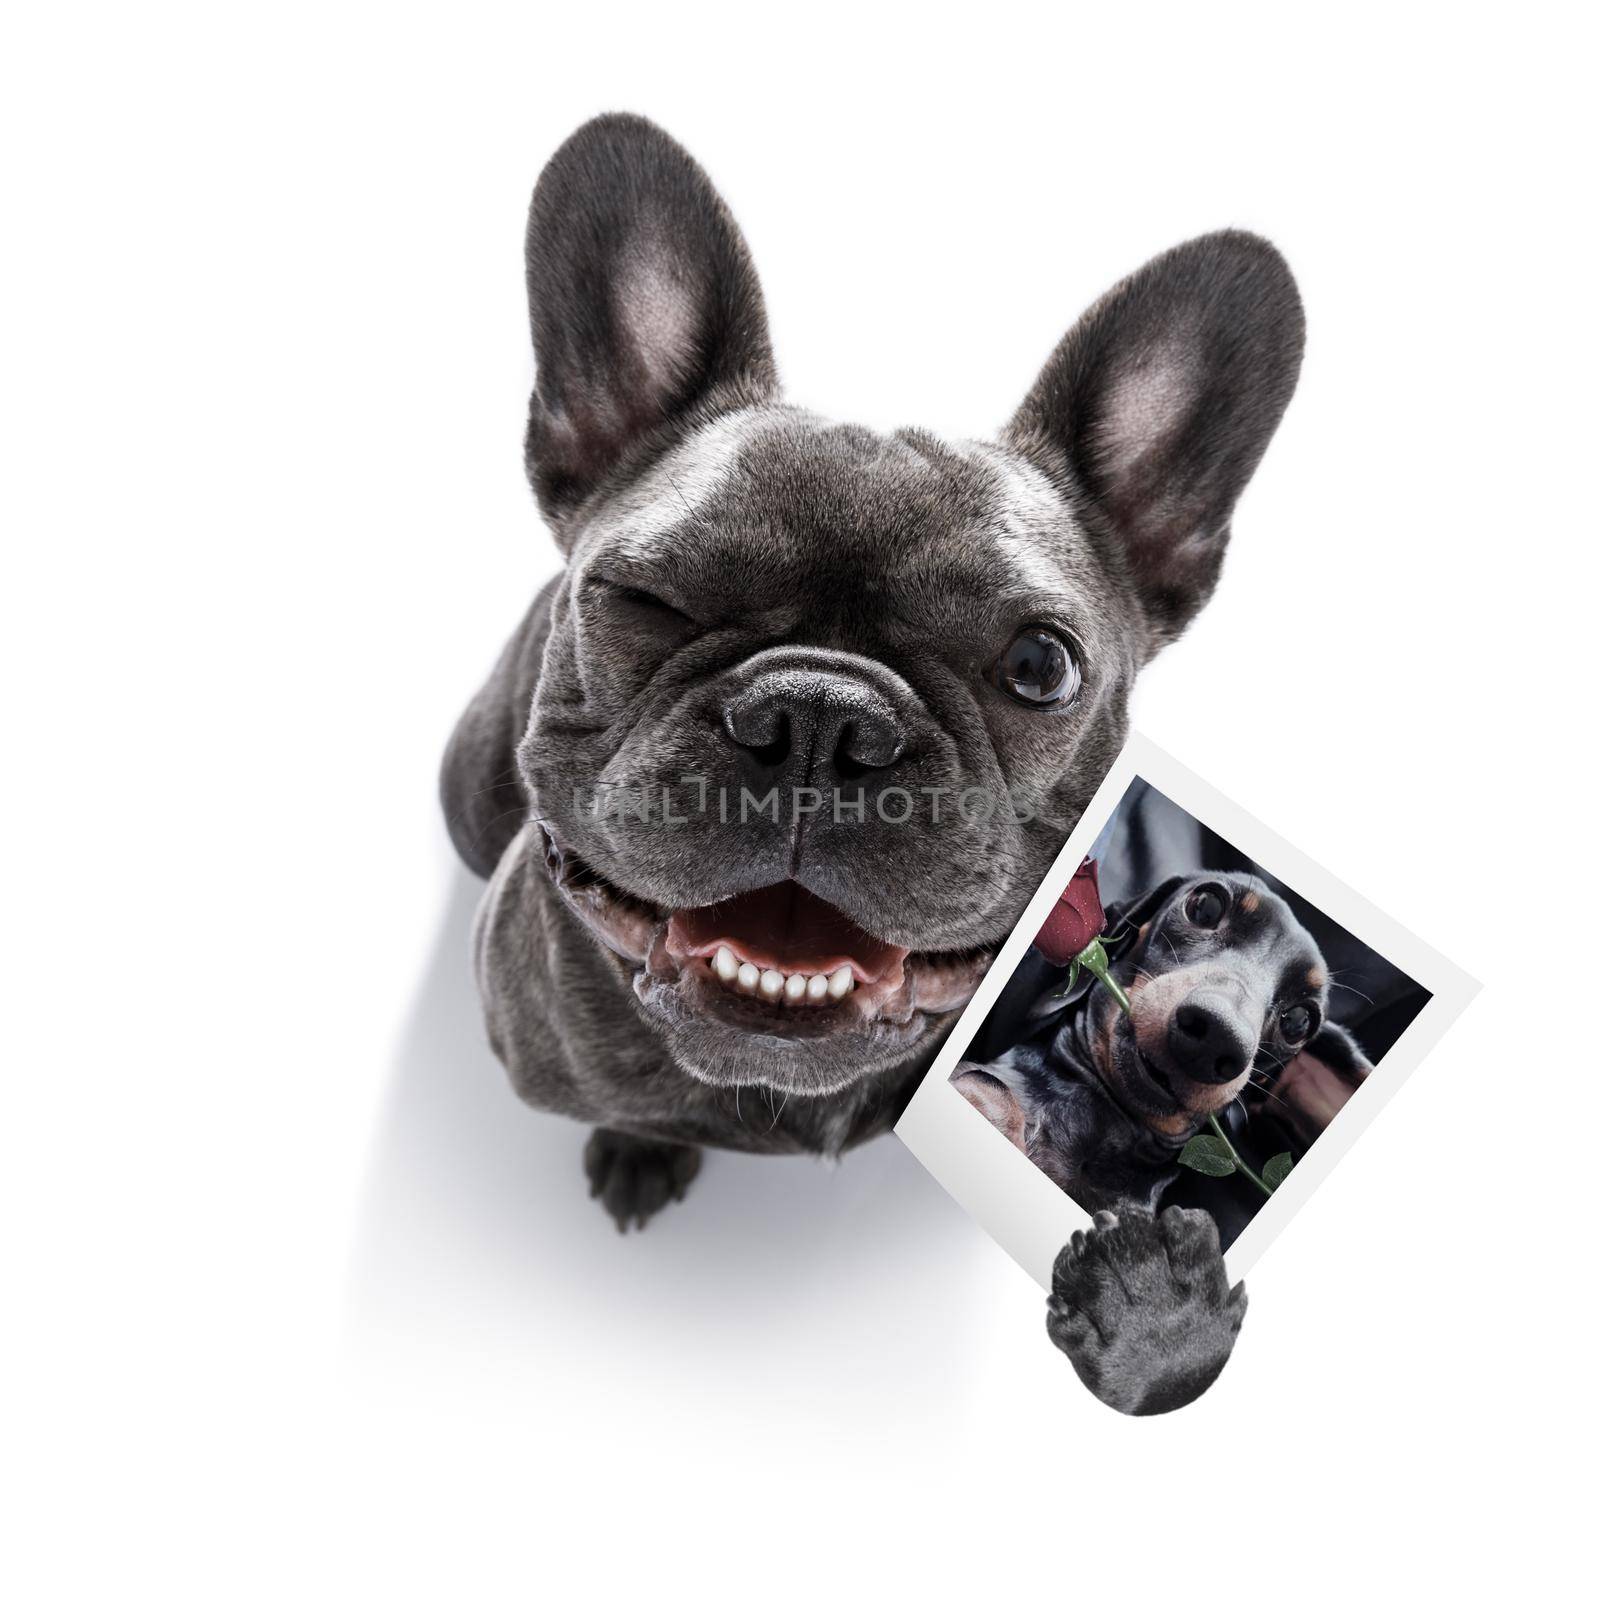 dog holding a photogrpah of a dog  by Brosch